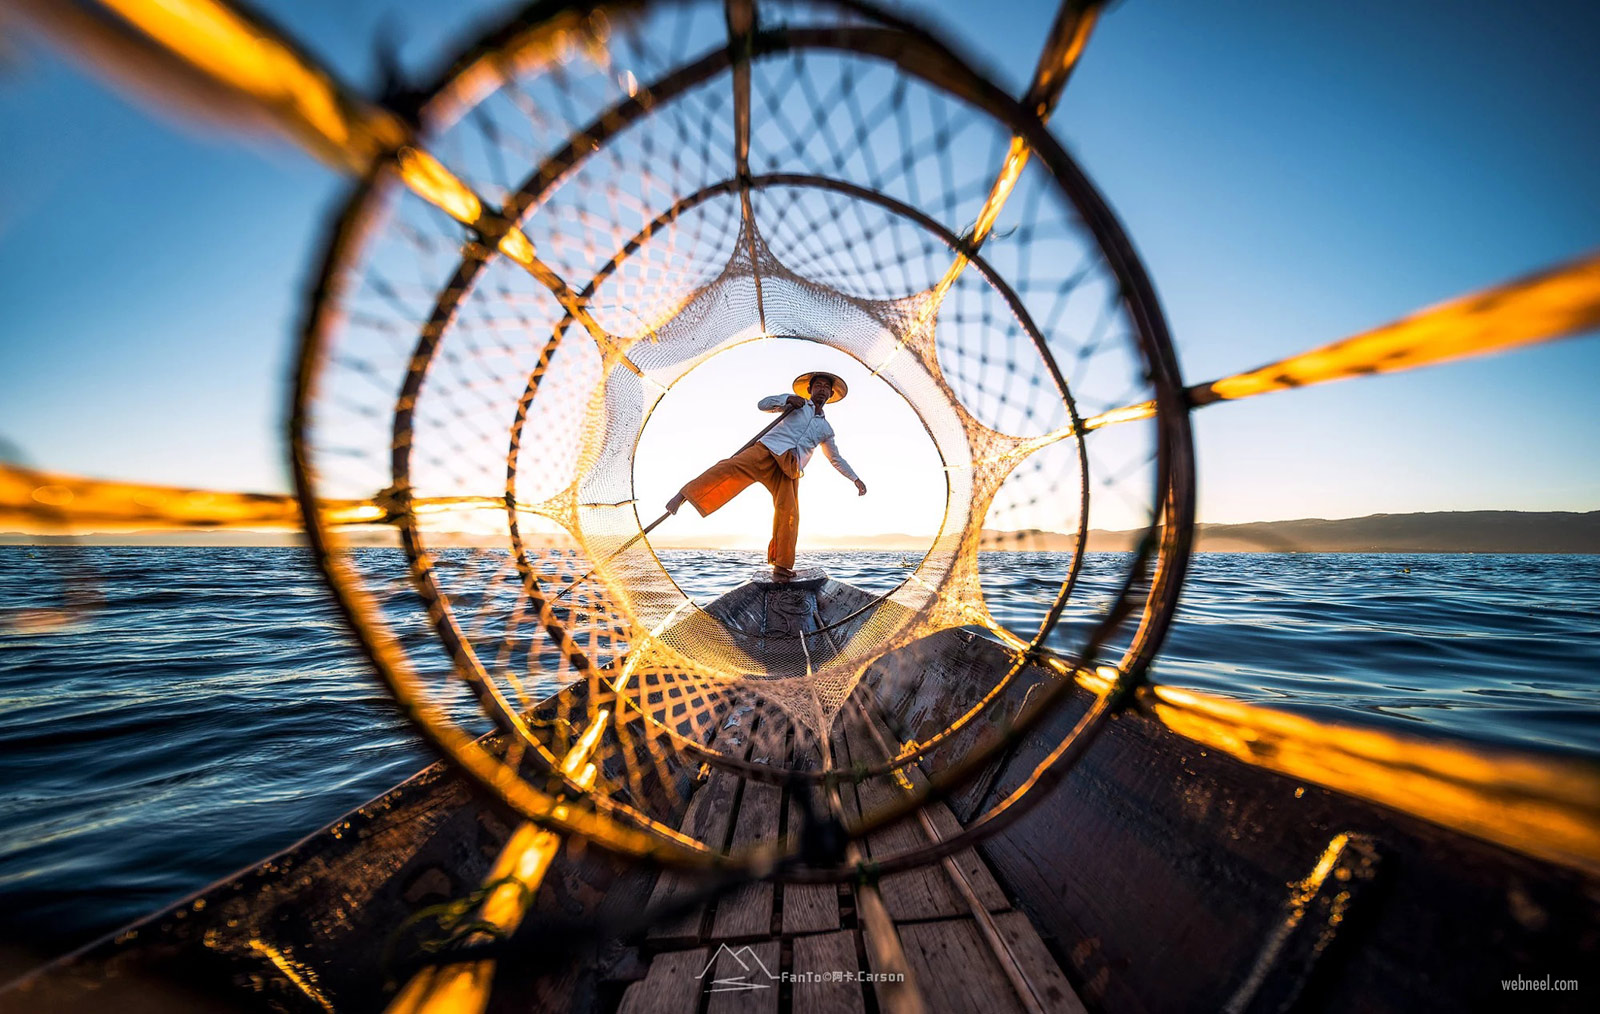 fisherman creative photography ideas by aka carson